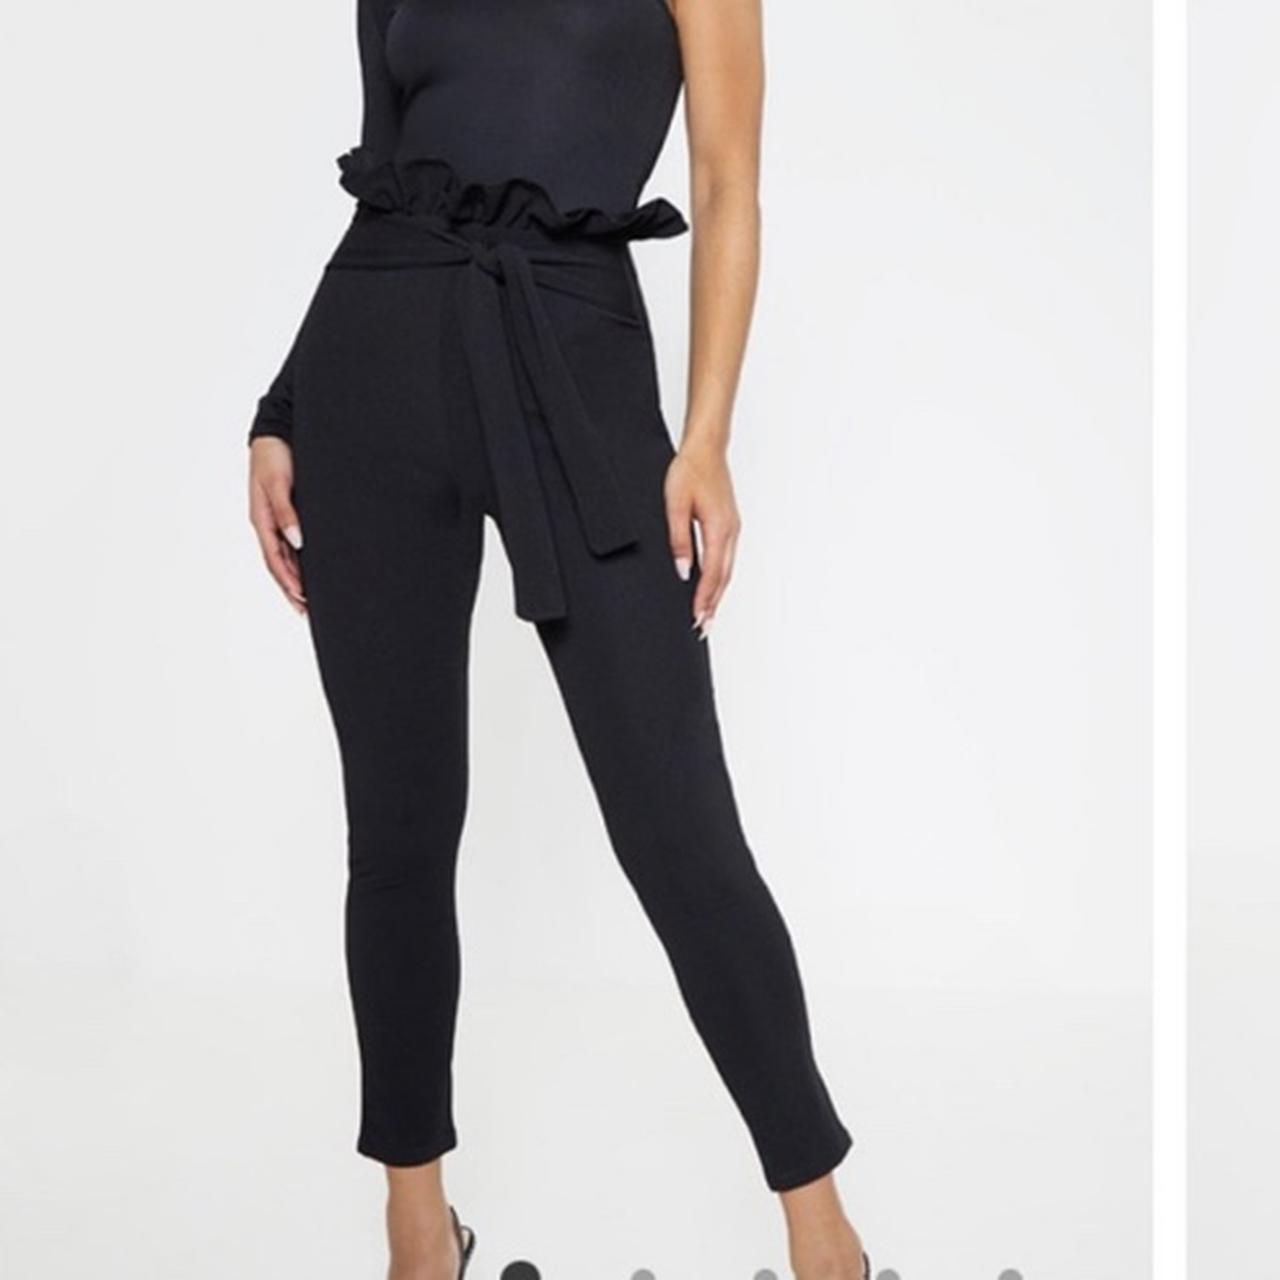 Buy WDIRARA Women's Plus Size Plaid Paper Bag Waist Pants Casual Skinny  Pants, Black and White, 4X-Large Plus at Amazon.in